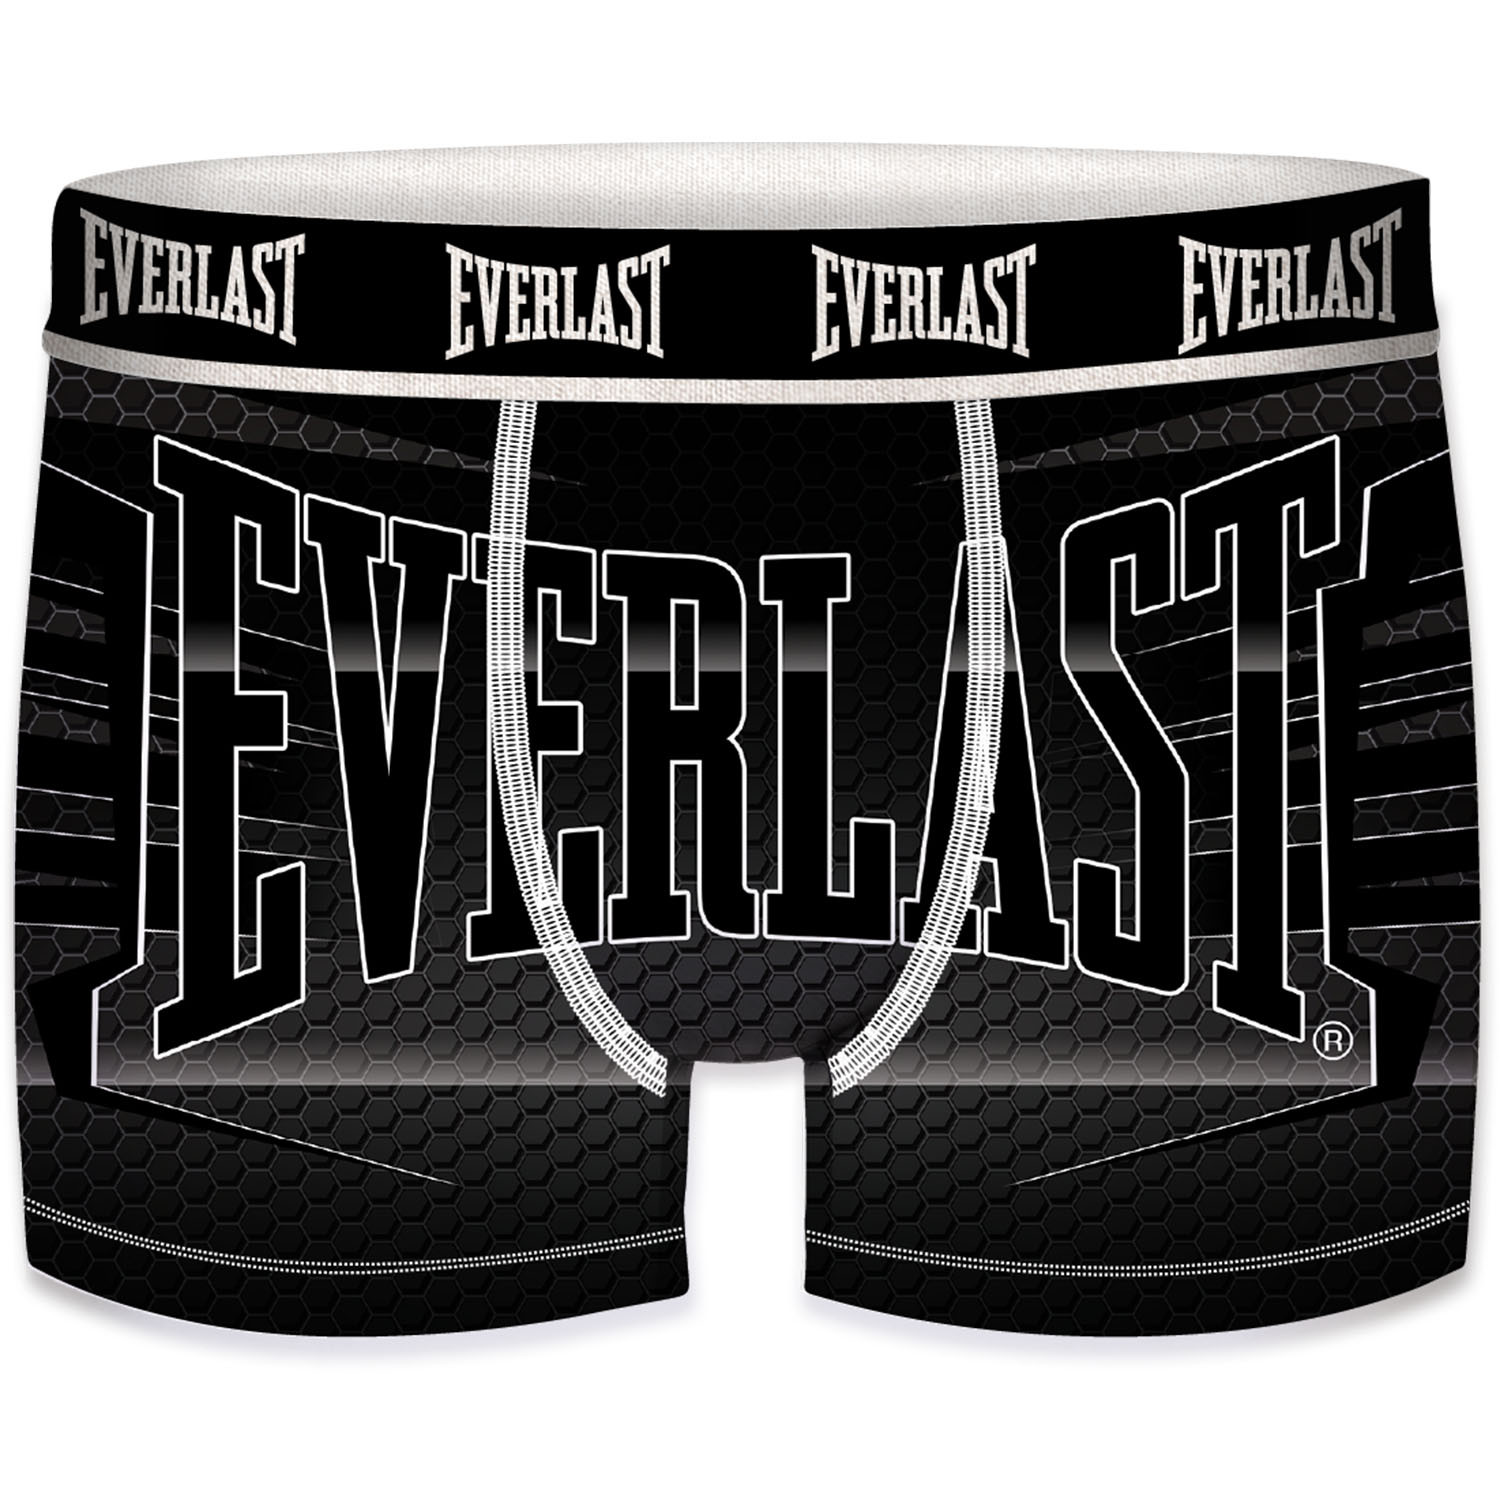 Everlast Boxershorts, One3, black, M